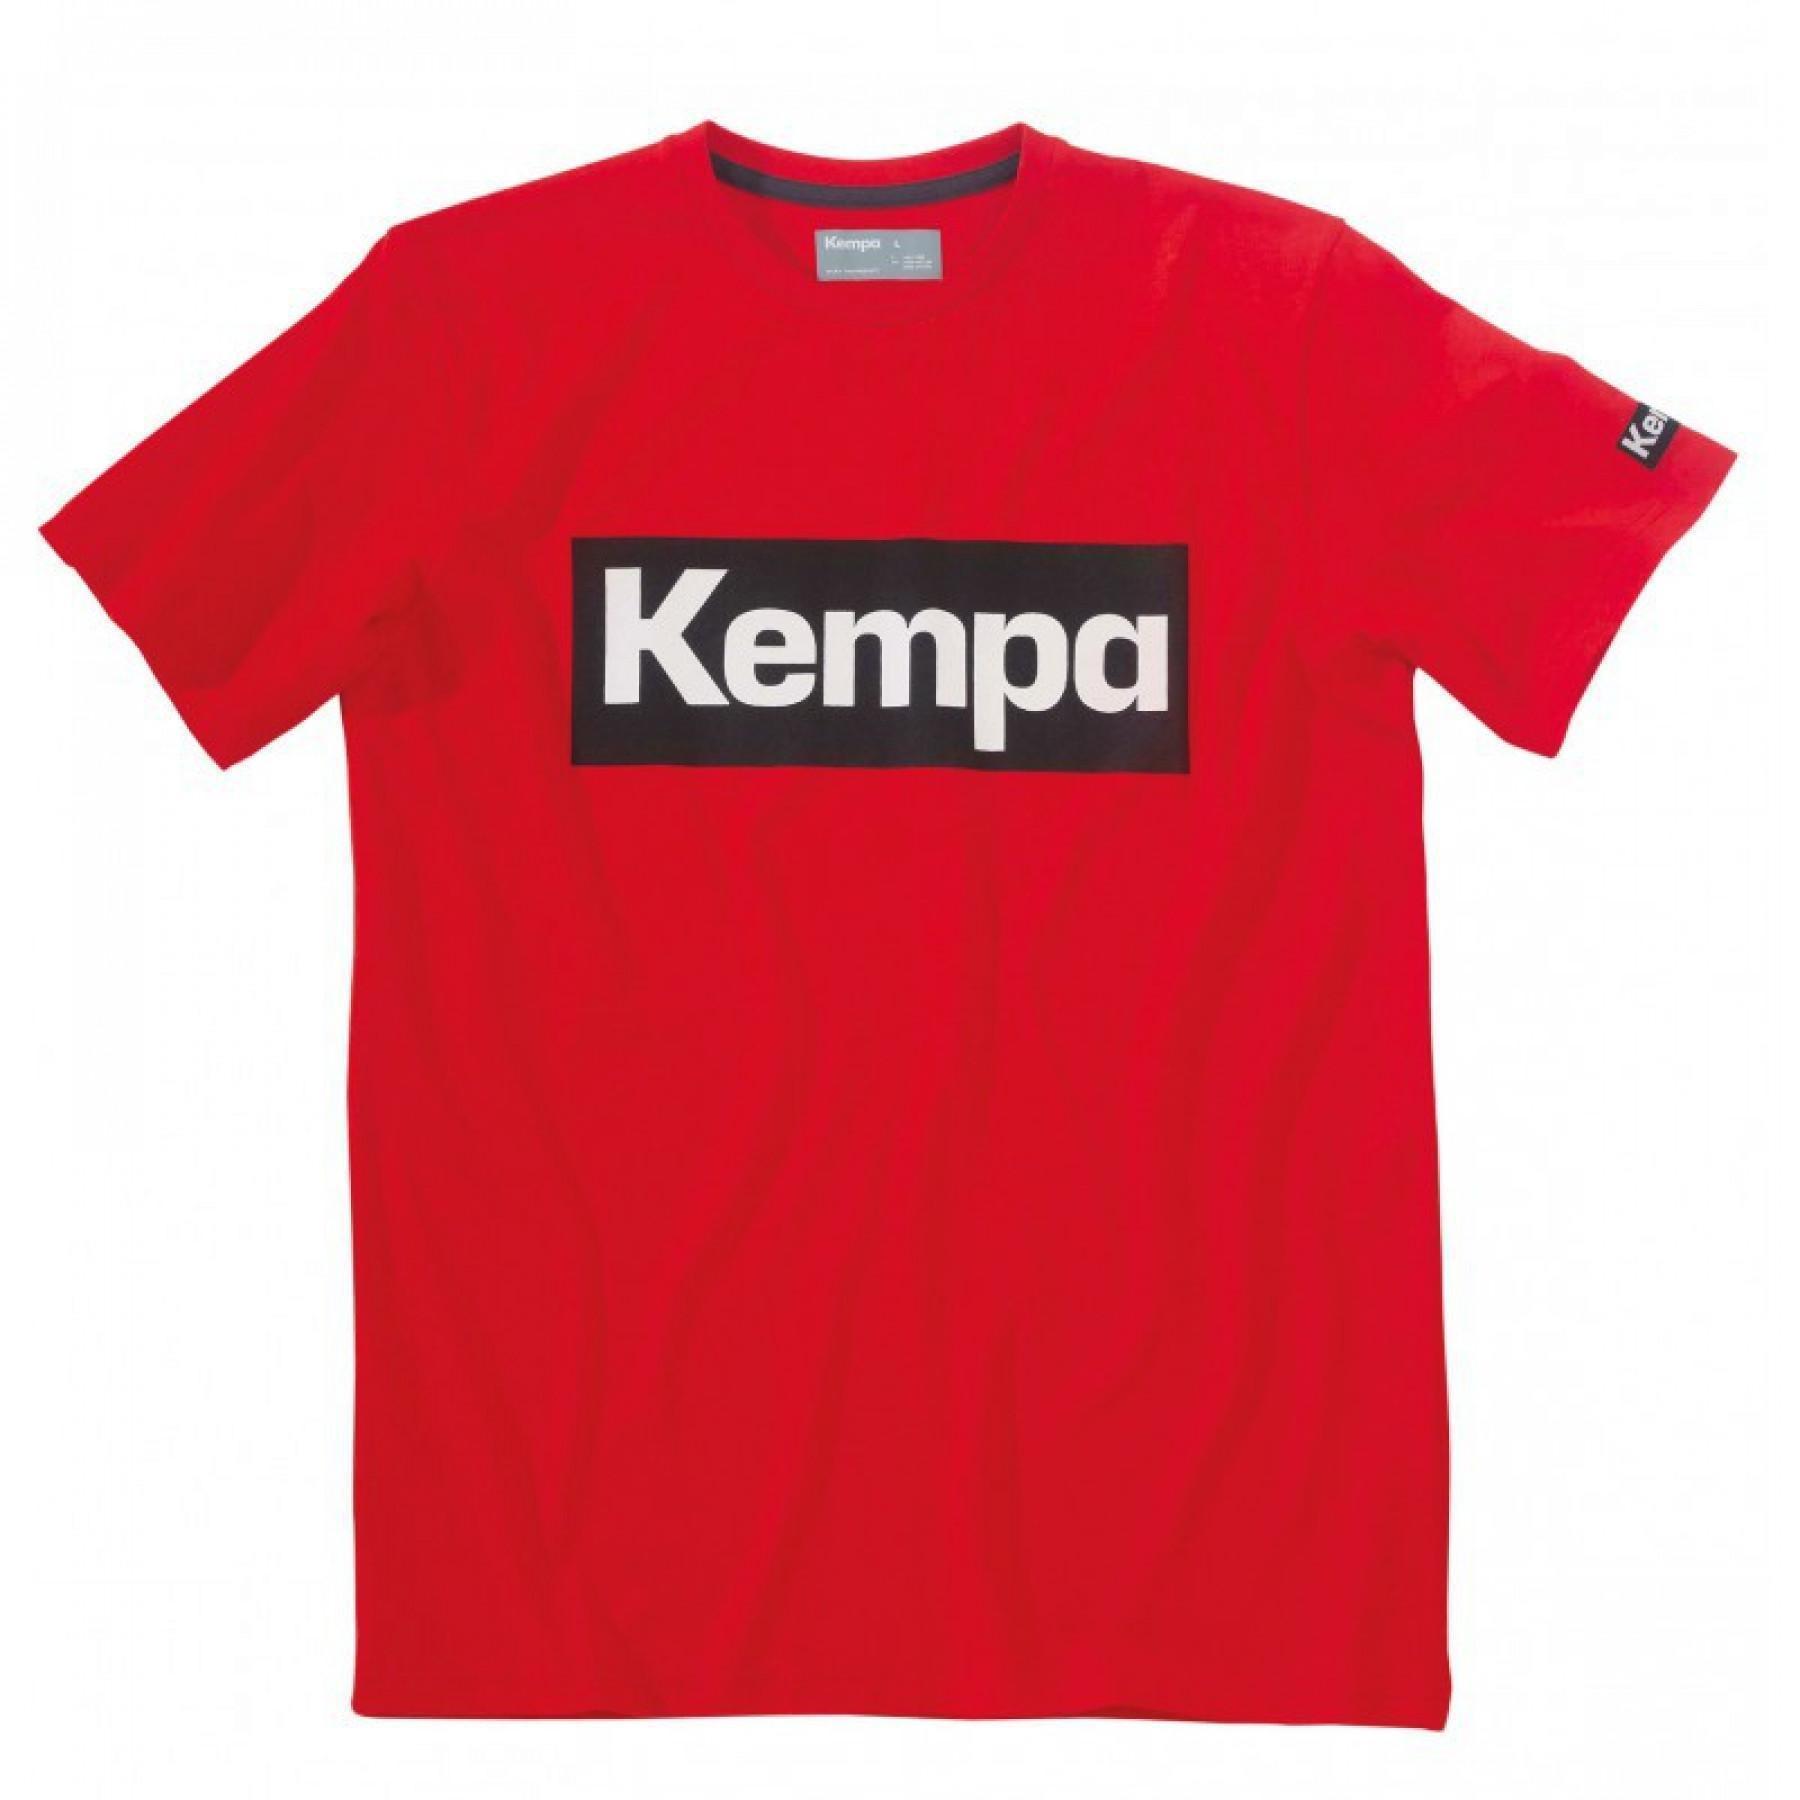 Pakiet Kempa One (chaussures + t-shirt + chaussettes)